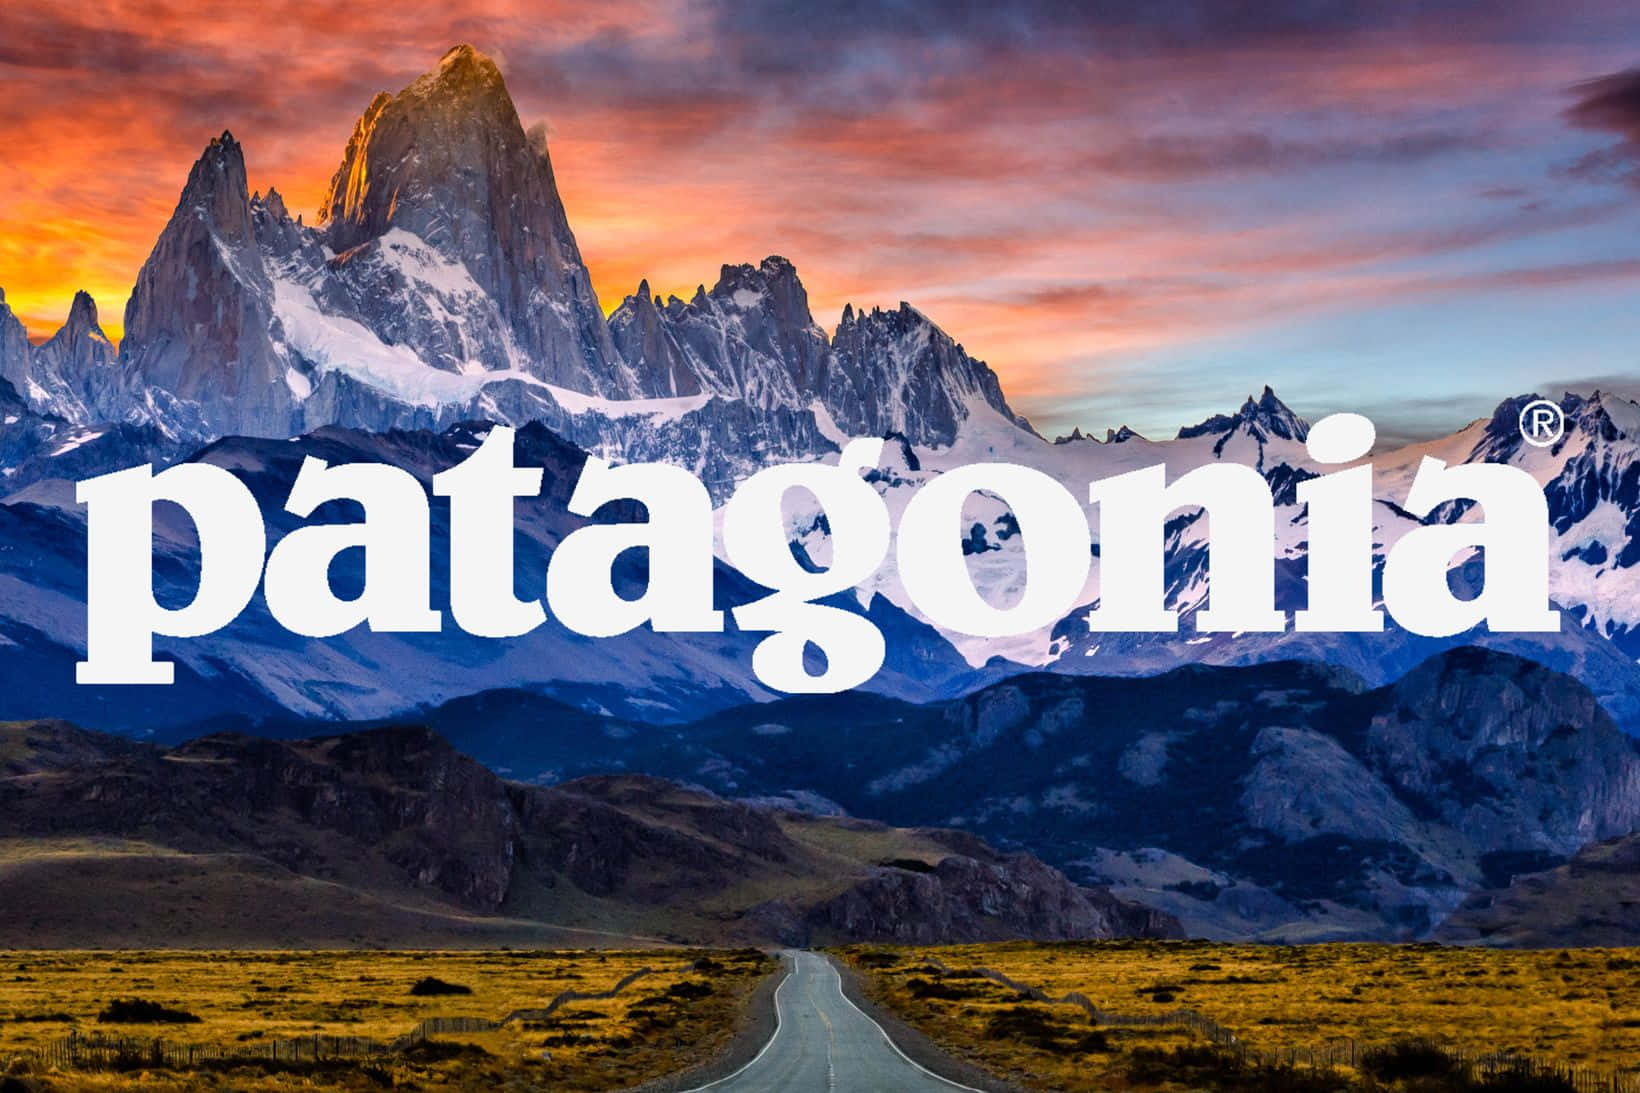 Vibrant colors illuminating Patagonia's grand mountain peaks